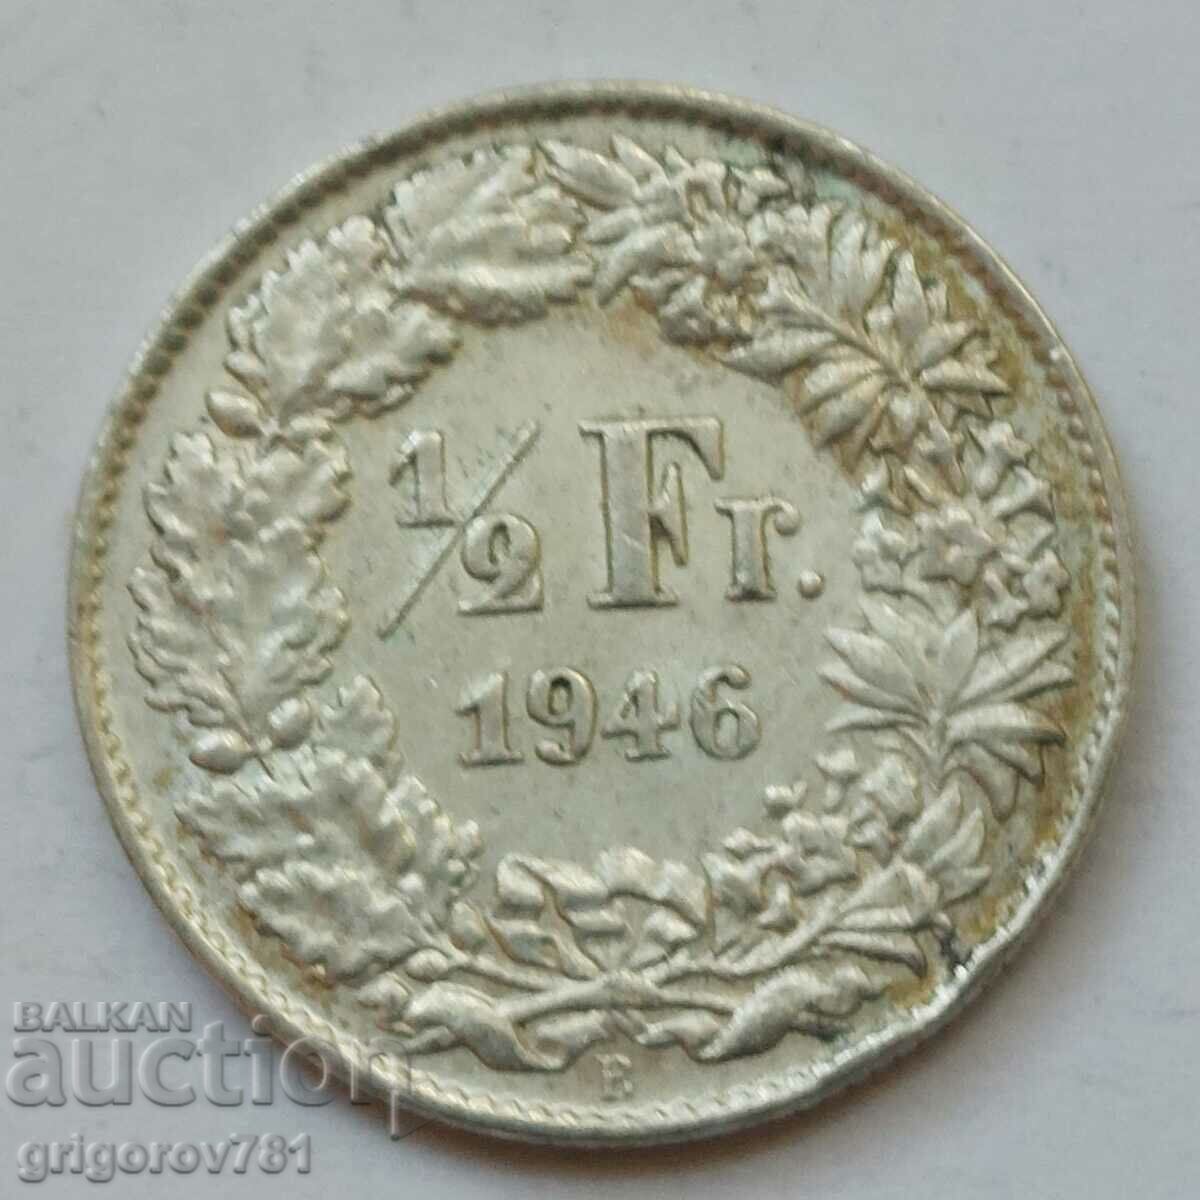 1/2 Franc Silver Switzerland 1946 B - Silver Coin #181